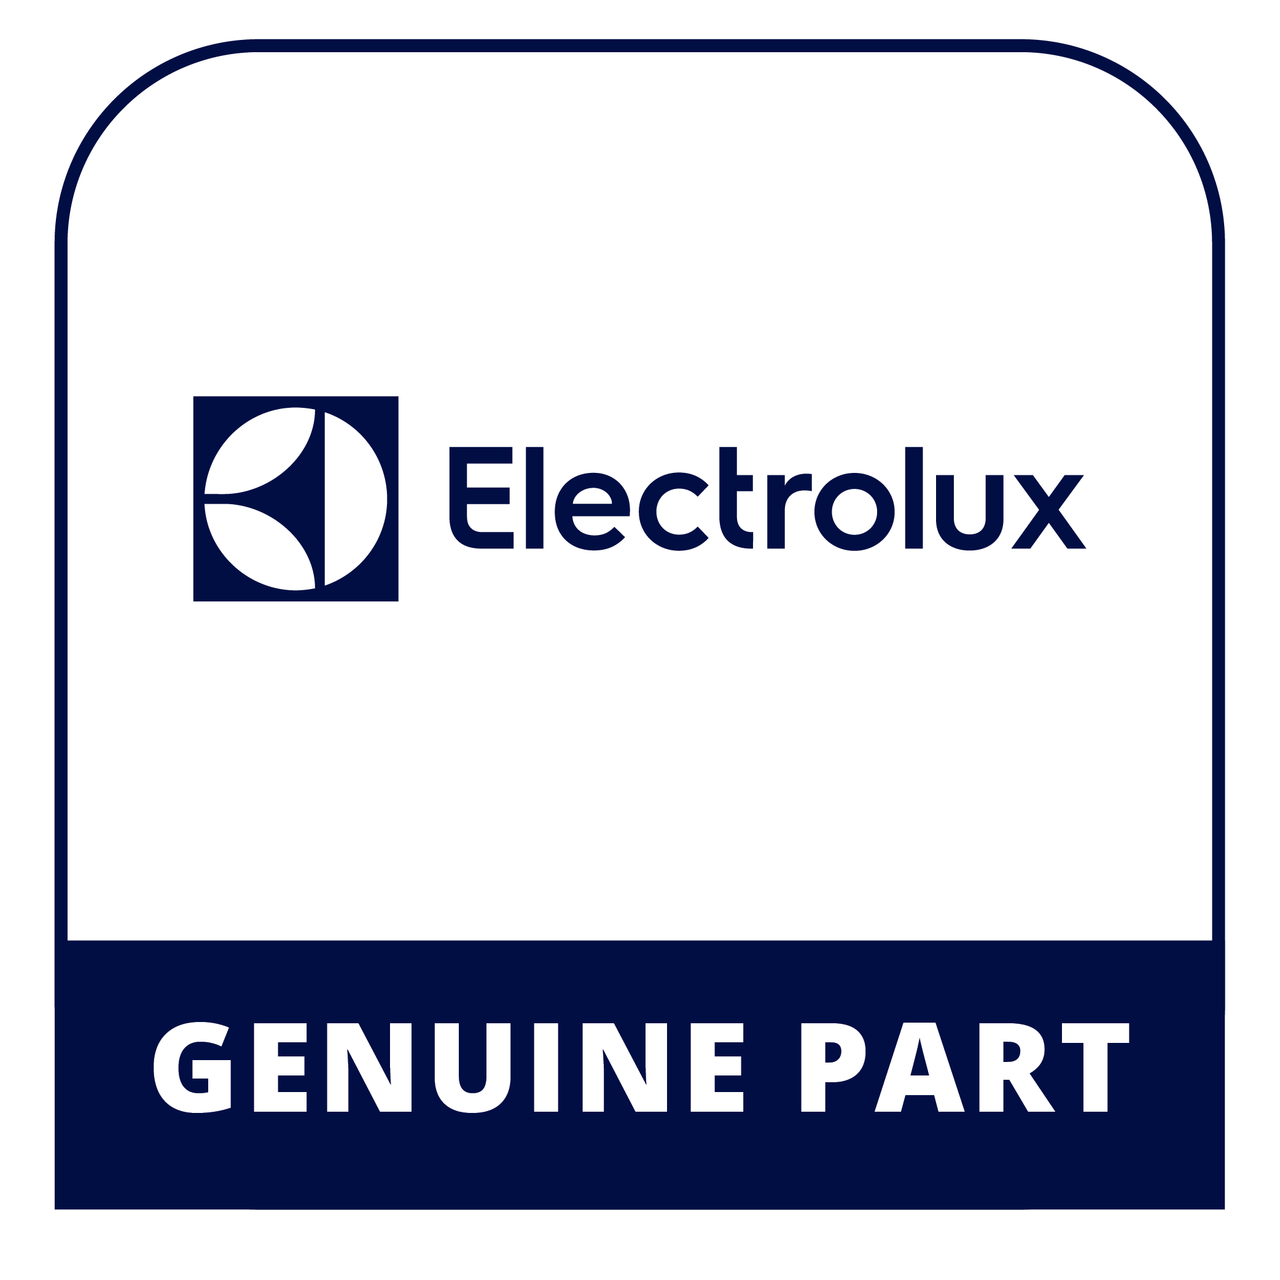 Frigidaire - Electrolux 5304475099 Label - Genuine Electrolux Part